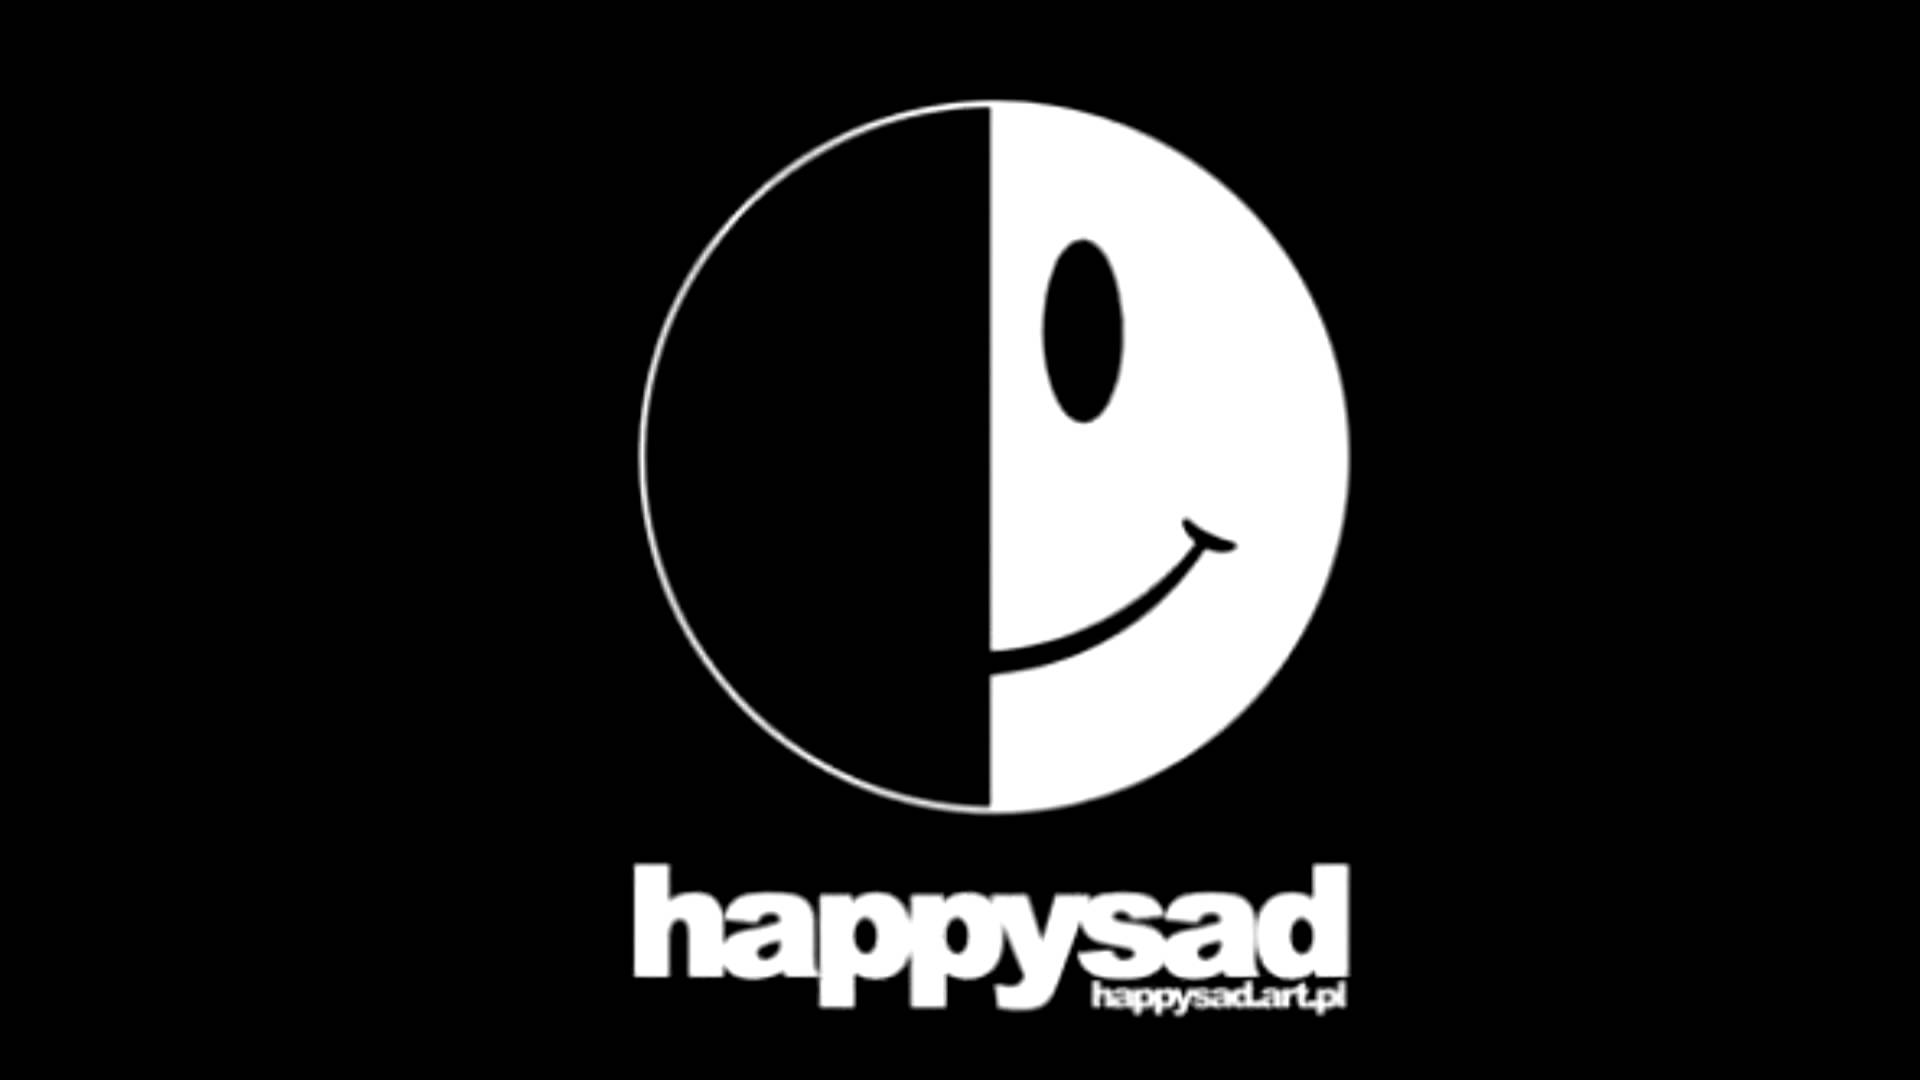 Free Happy Sad, Download Free Clip Art .clipart Library.com